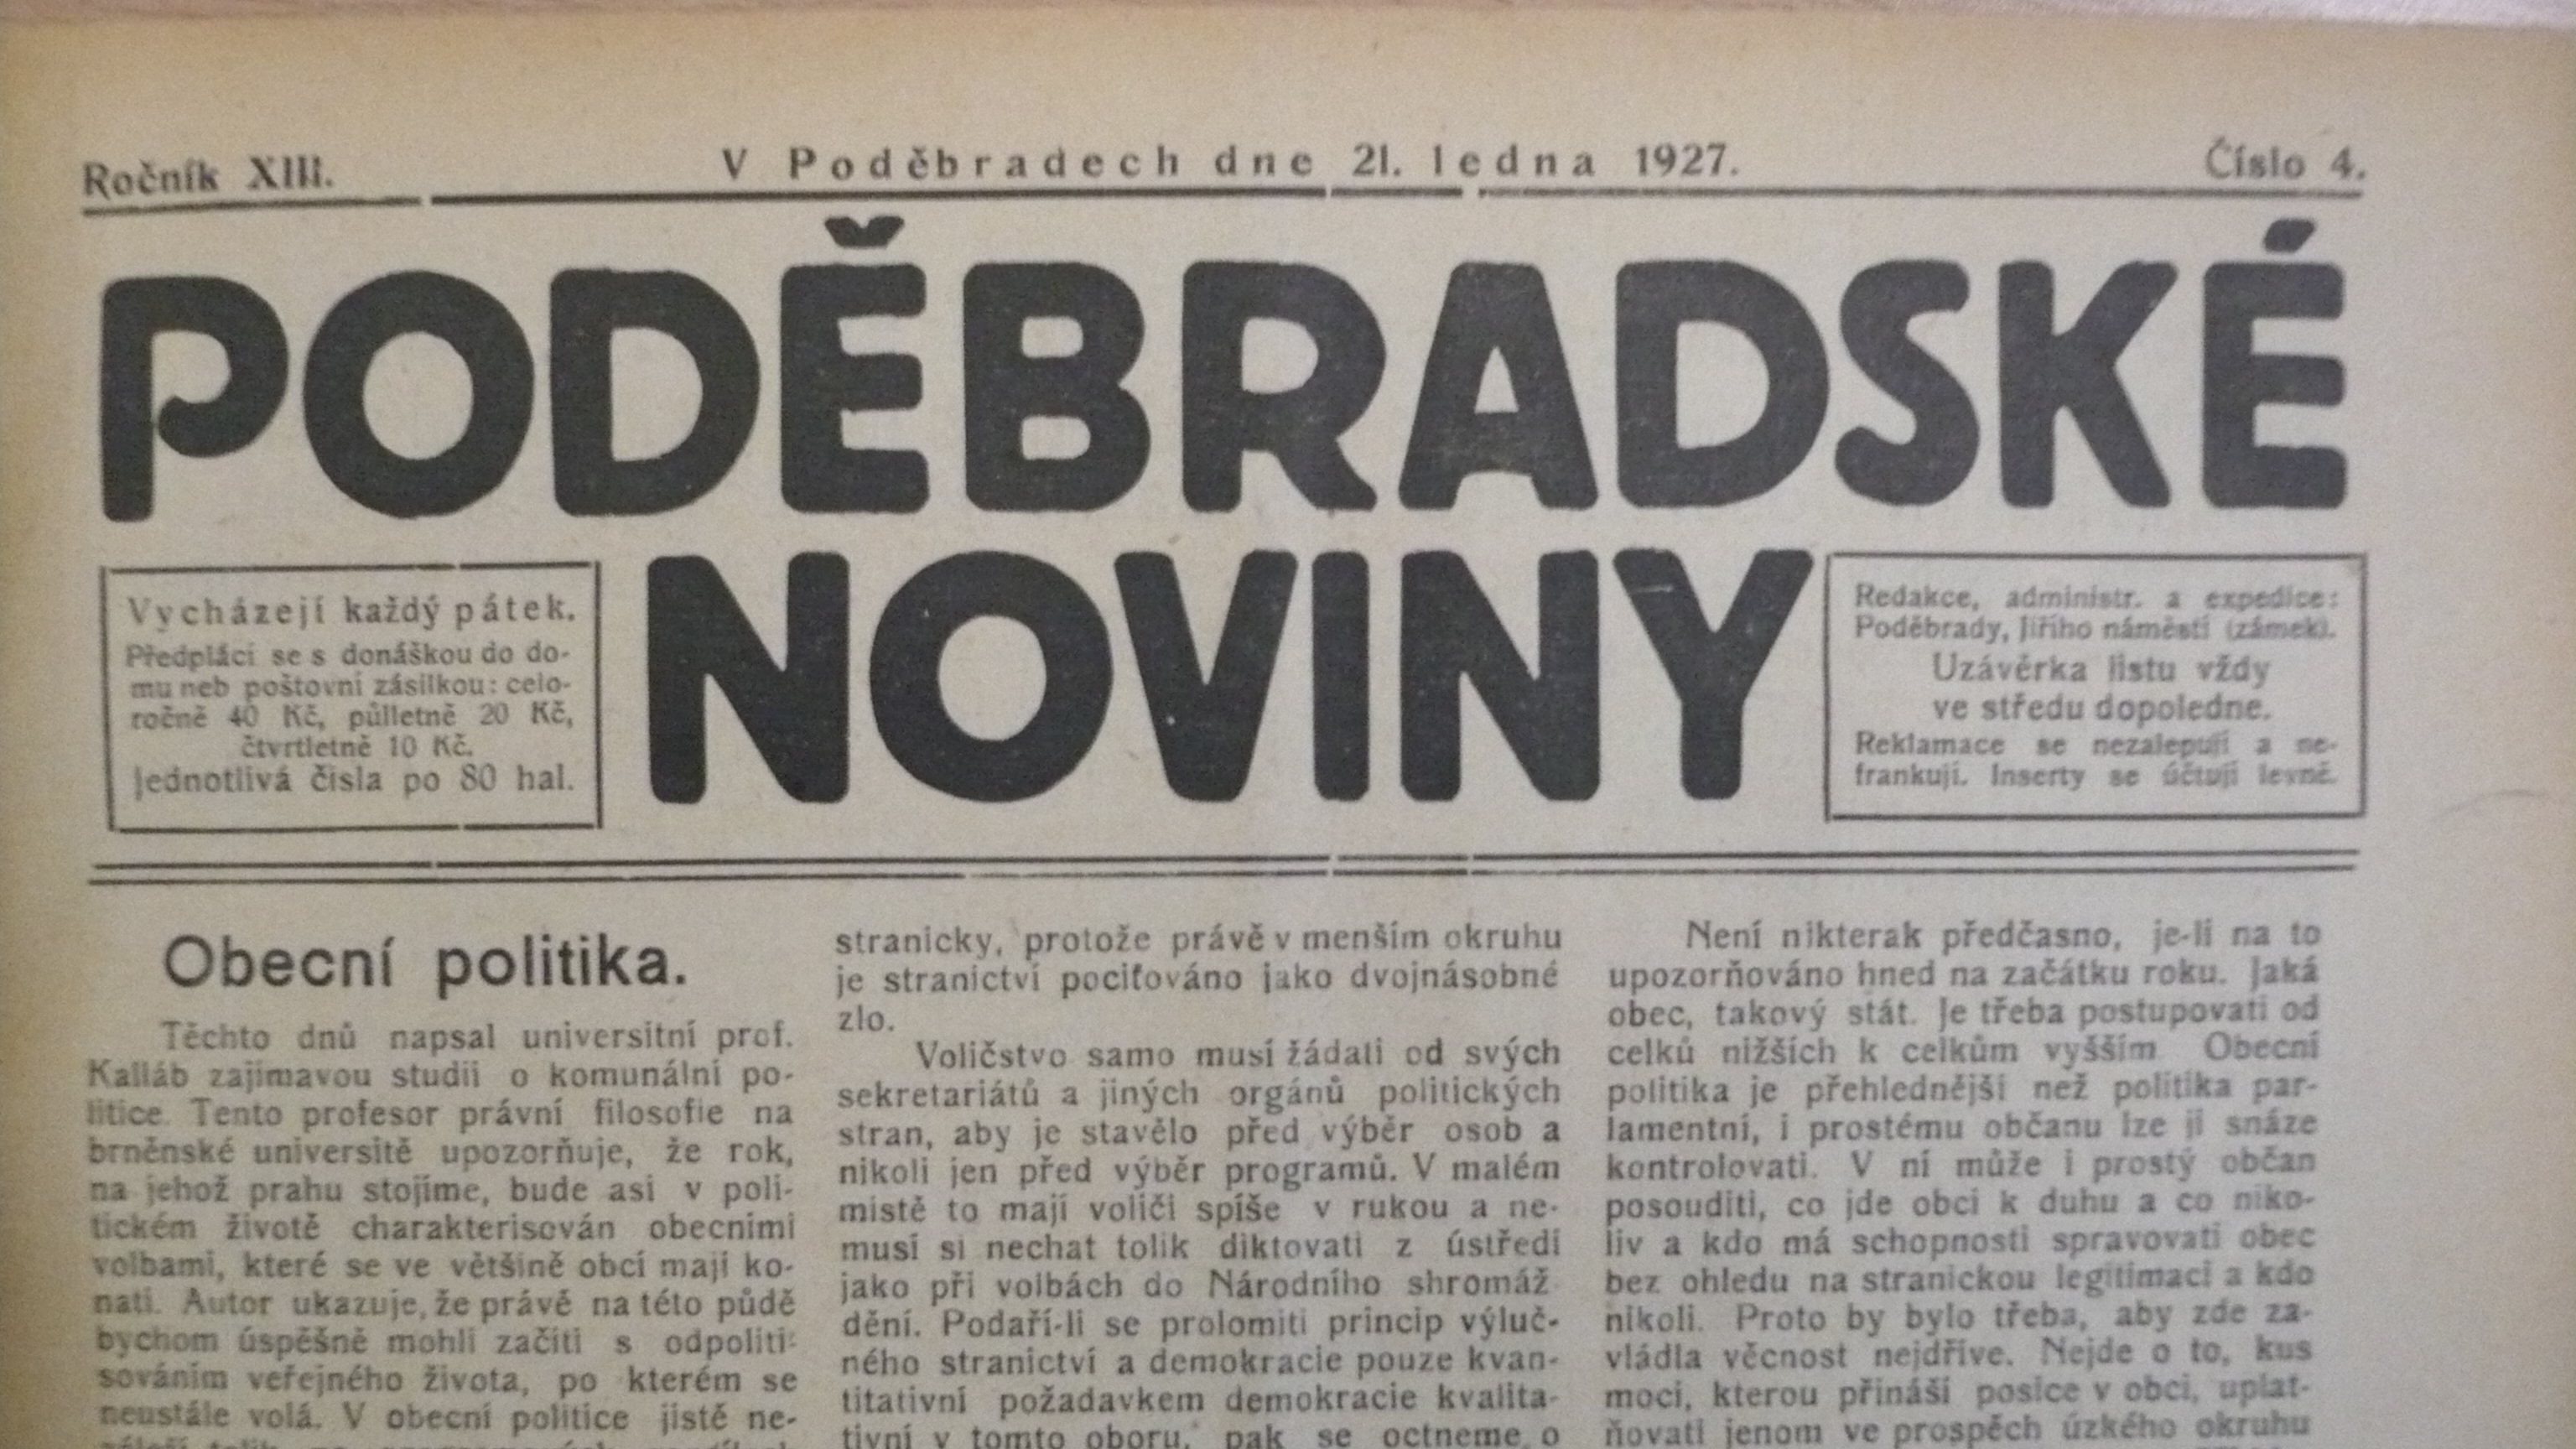 Podebradske noviny